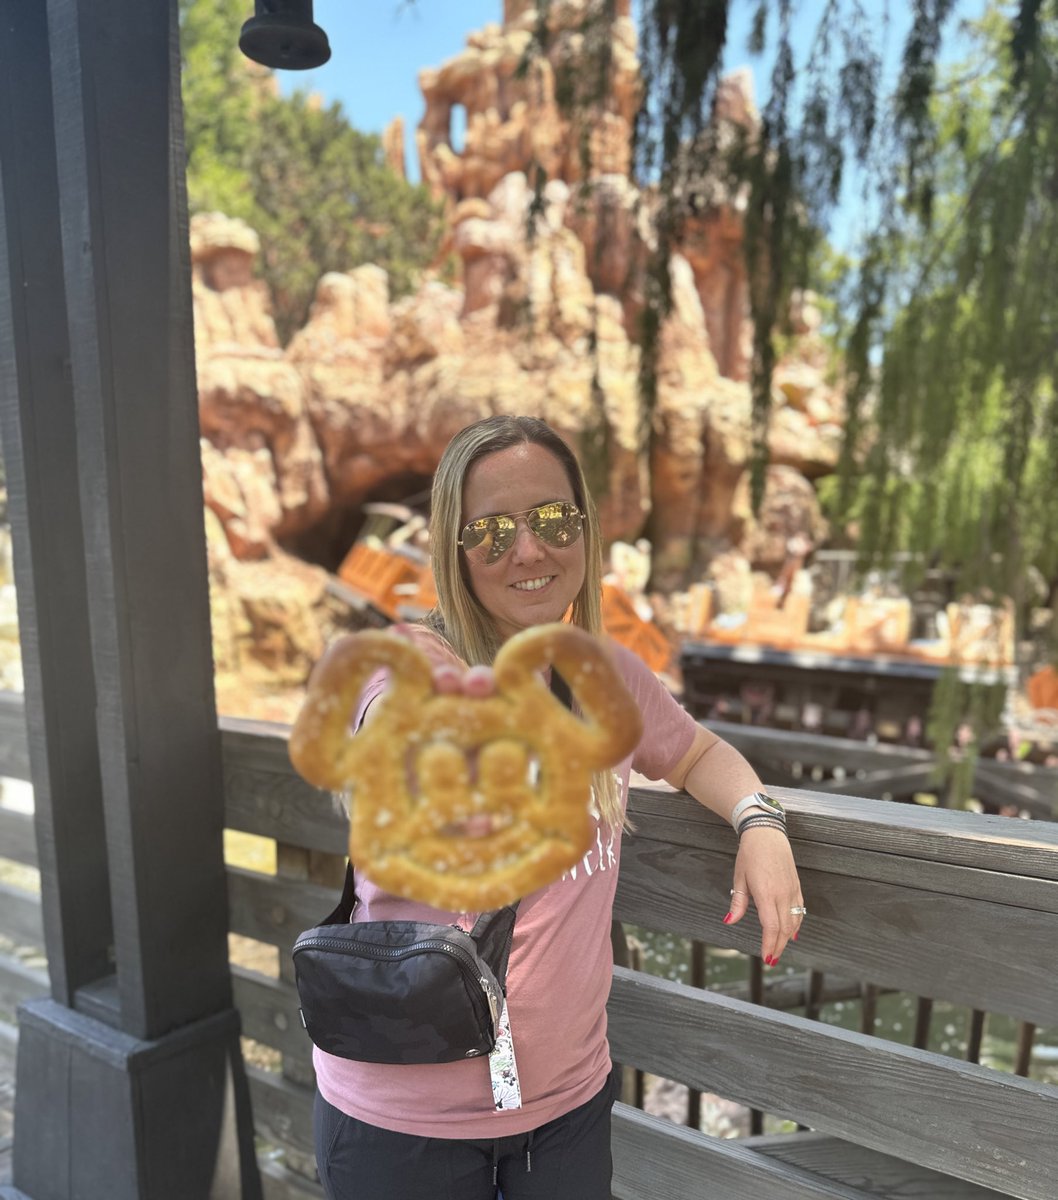 Mickey shaped food just tastes better. Do you agree? 

#disneyland #grandcalifornian #disney #pool #bookwithme #travelagent #travelplanner #traveladvisor #Disney100 #disneytravel #disneytrip